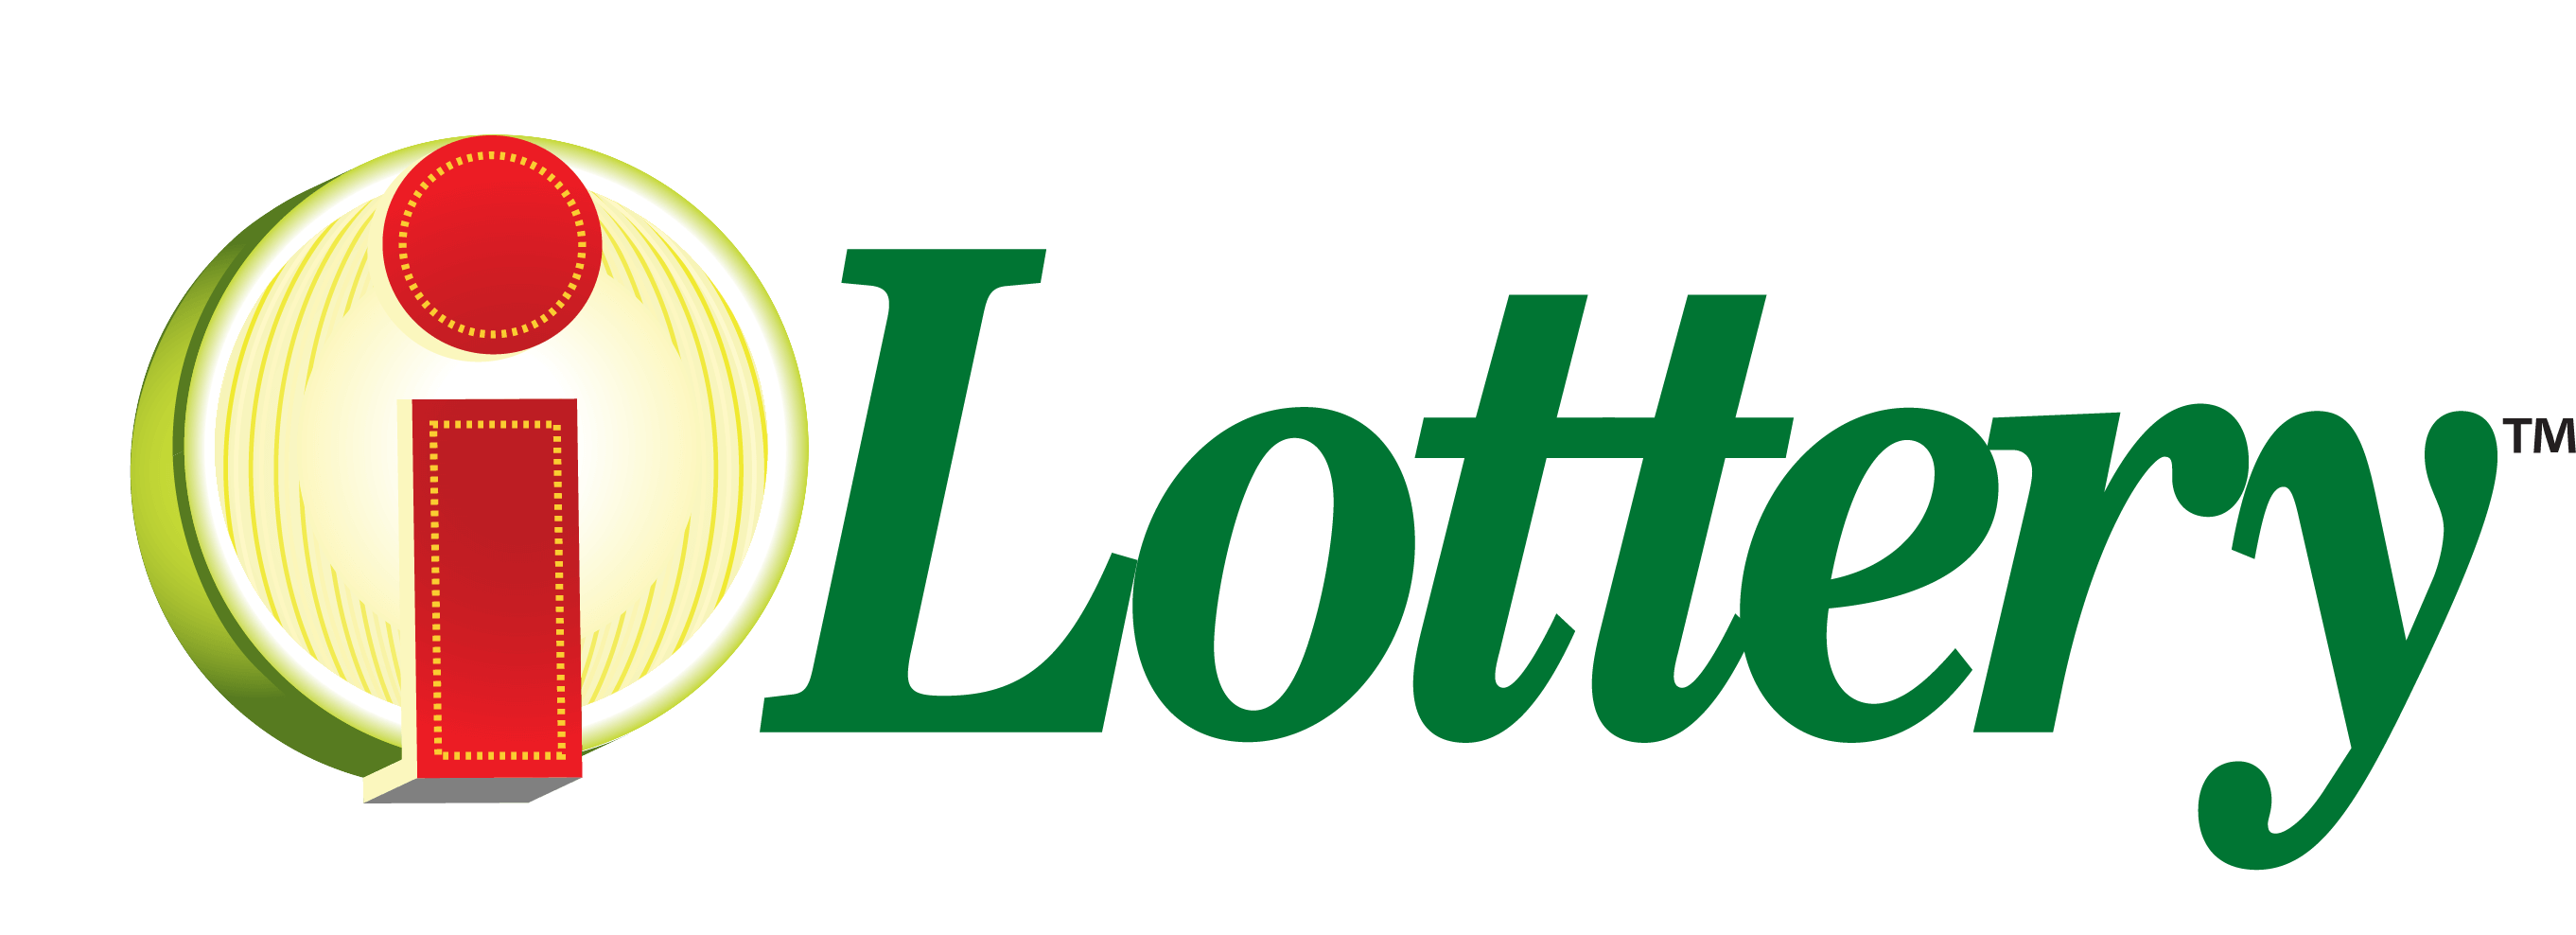 PA iLottery logo